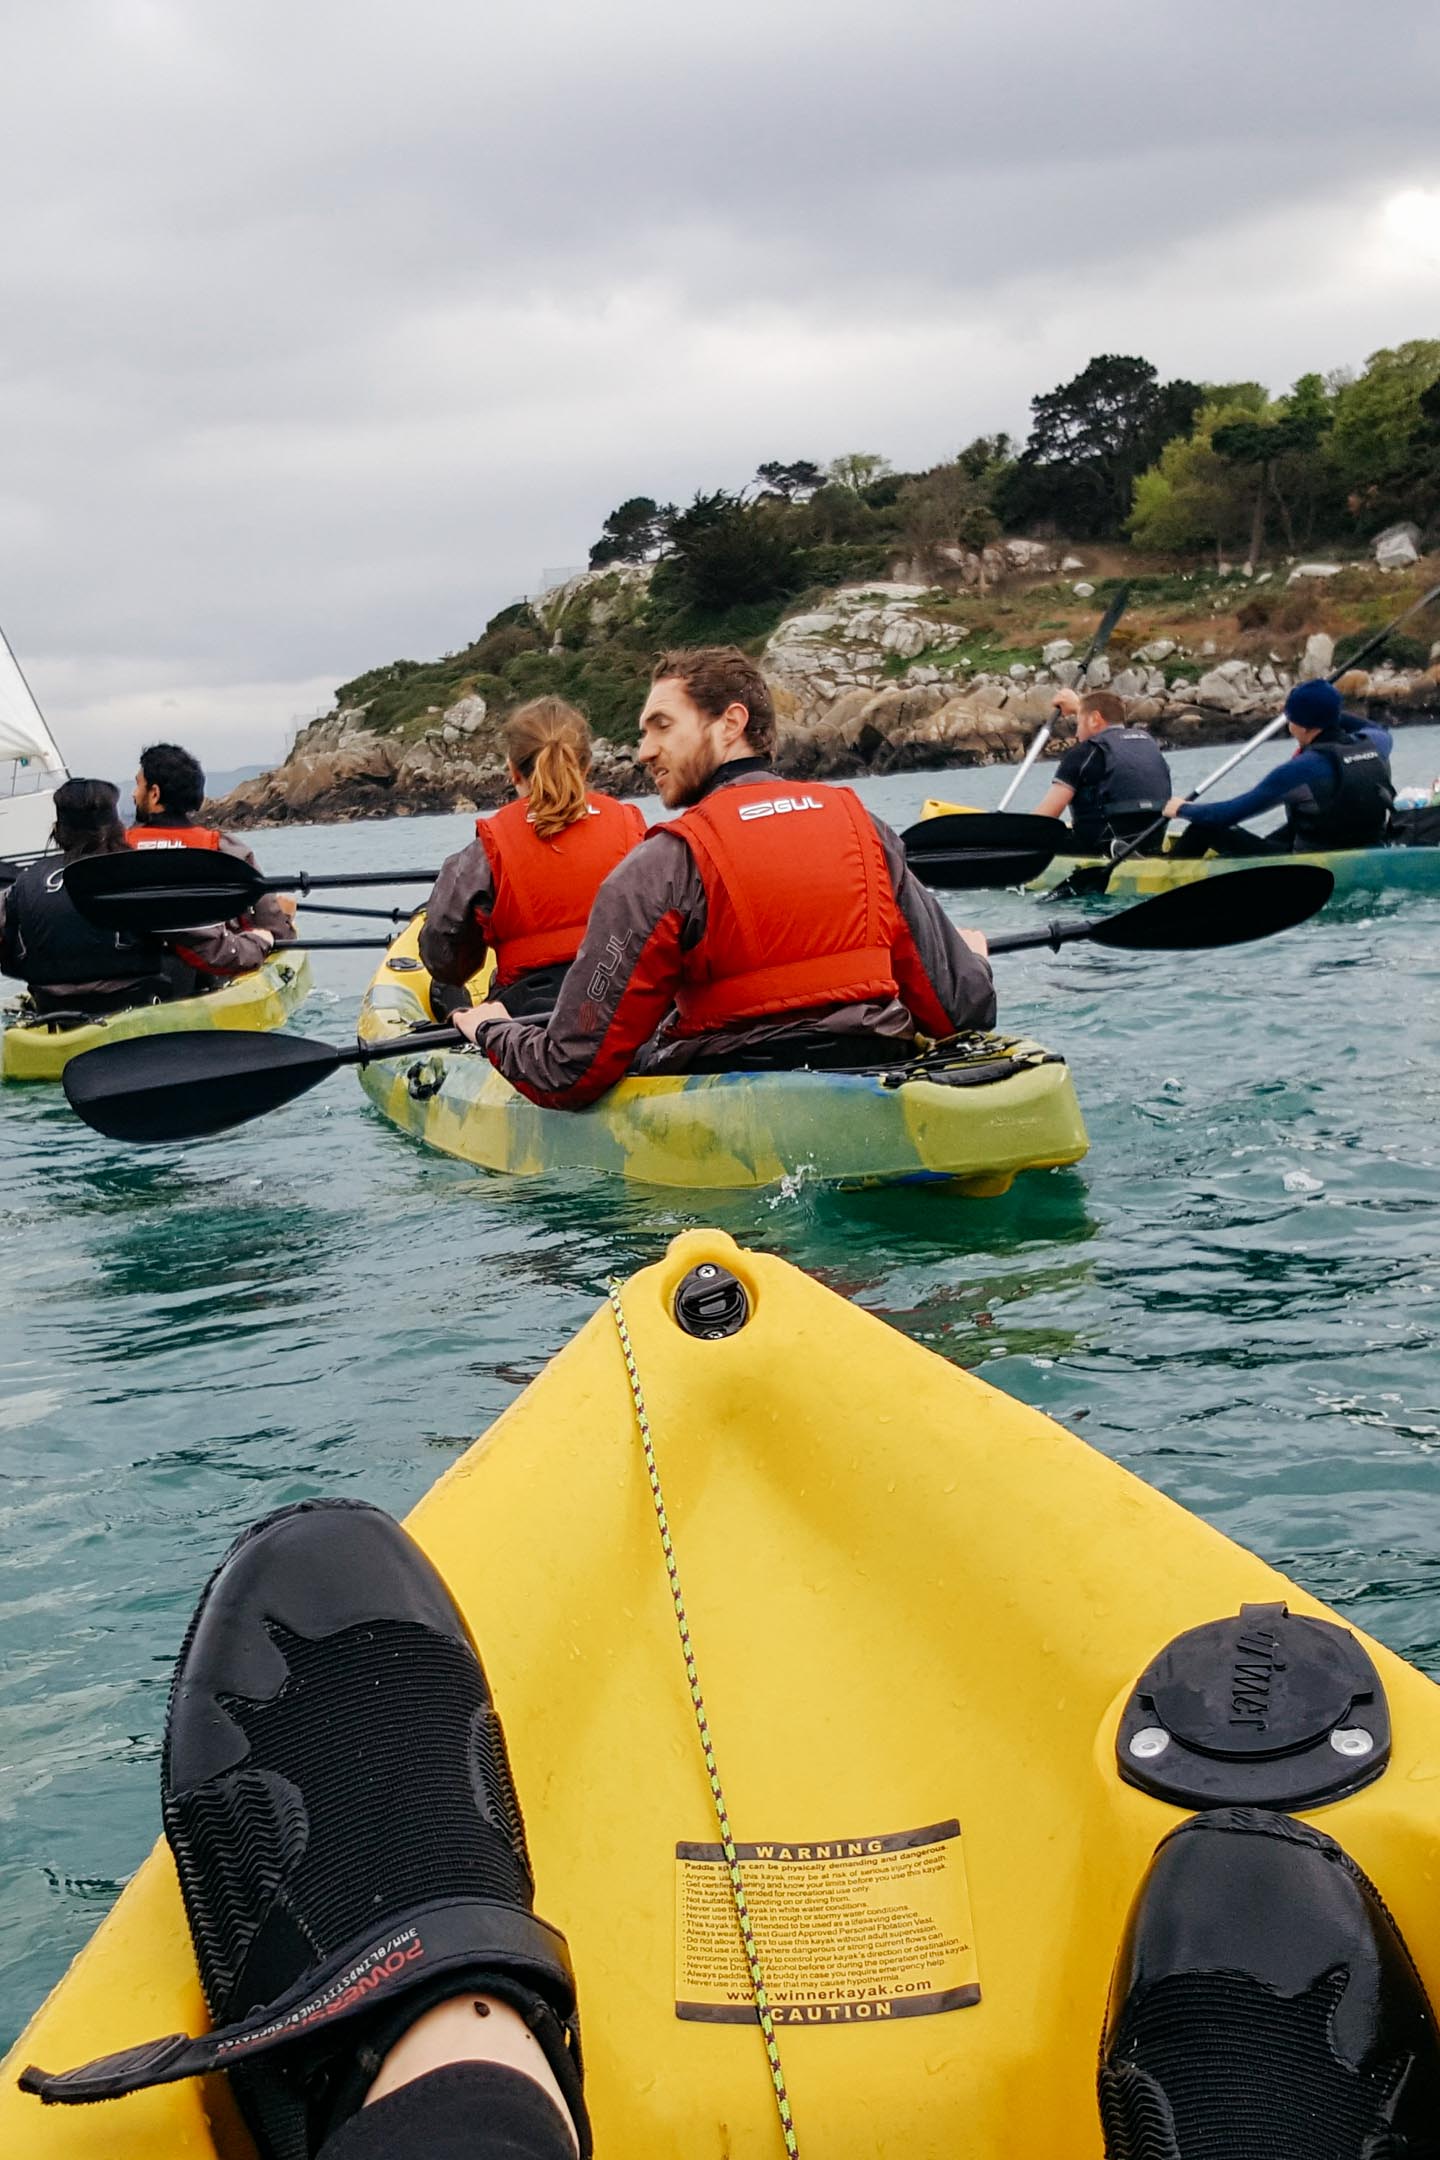 Sea Kayaking trip to Dalkey Island - Airbnb